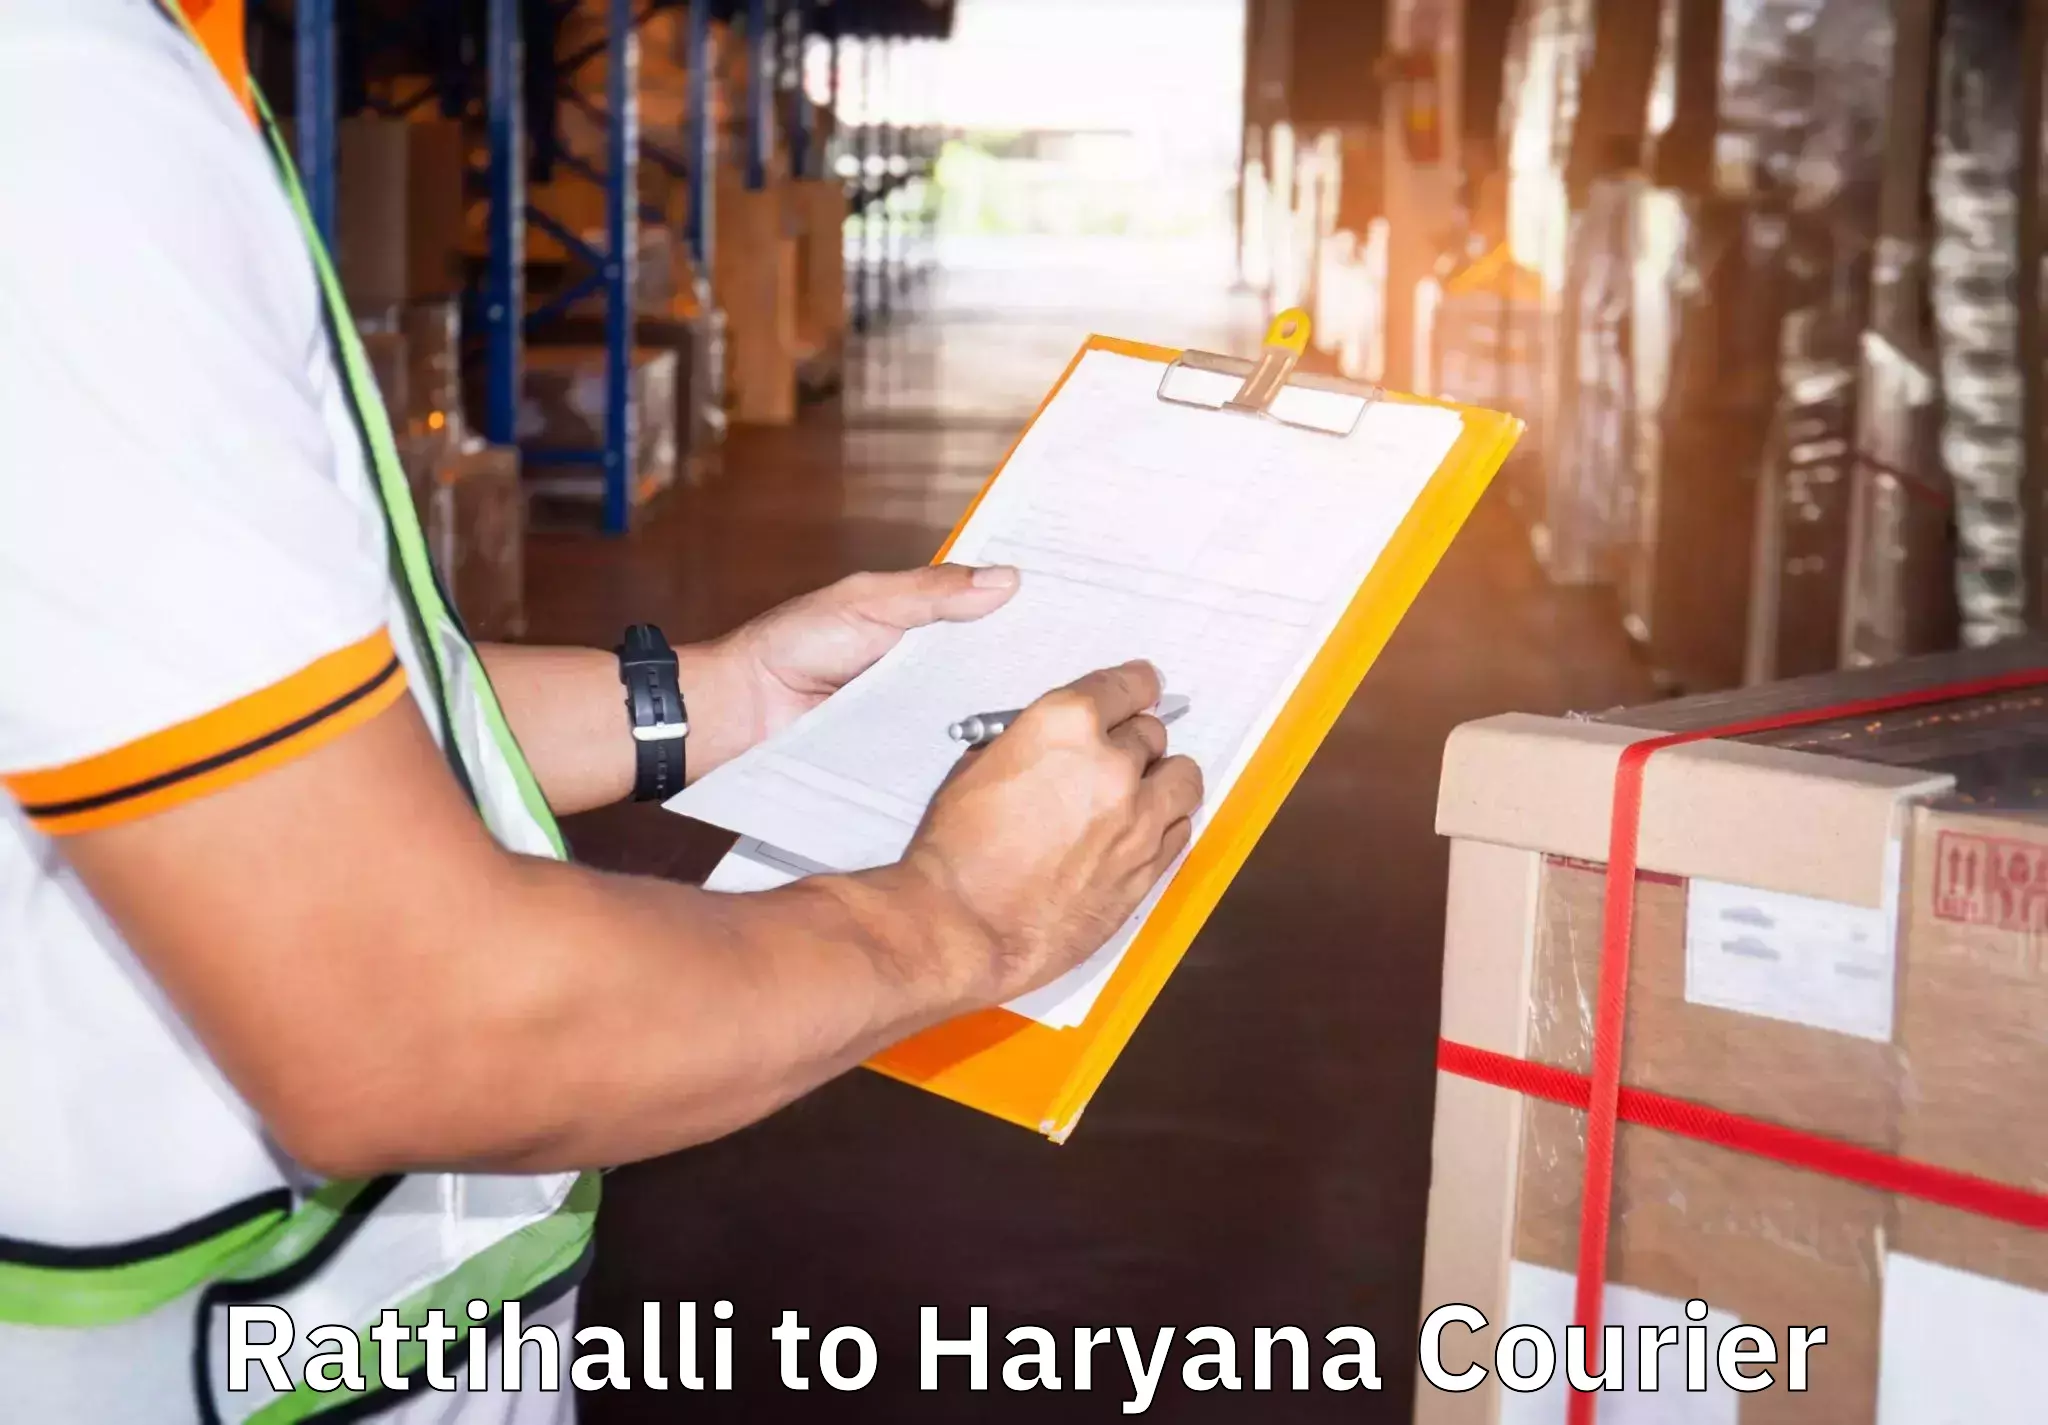 Moving and packing experts Rattihalli to Haryana